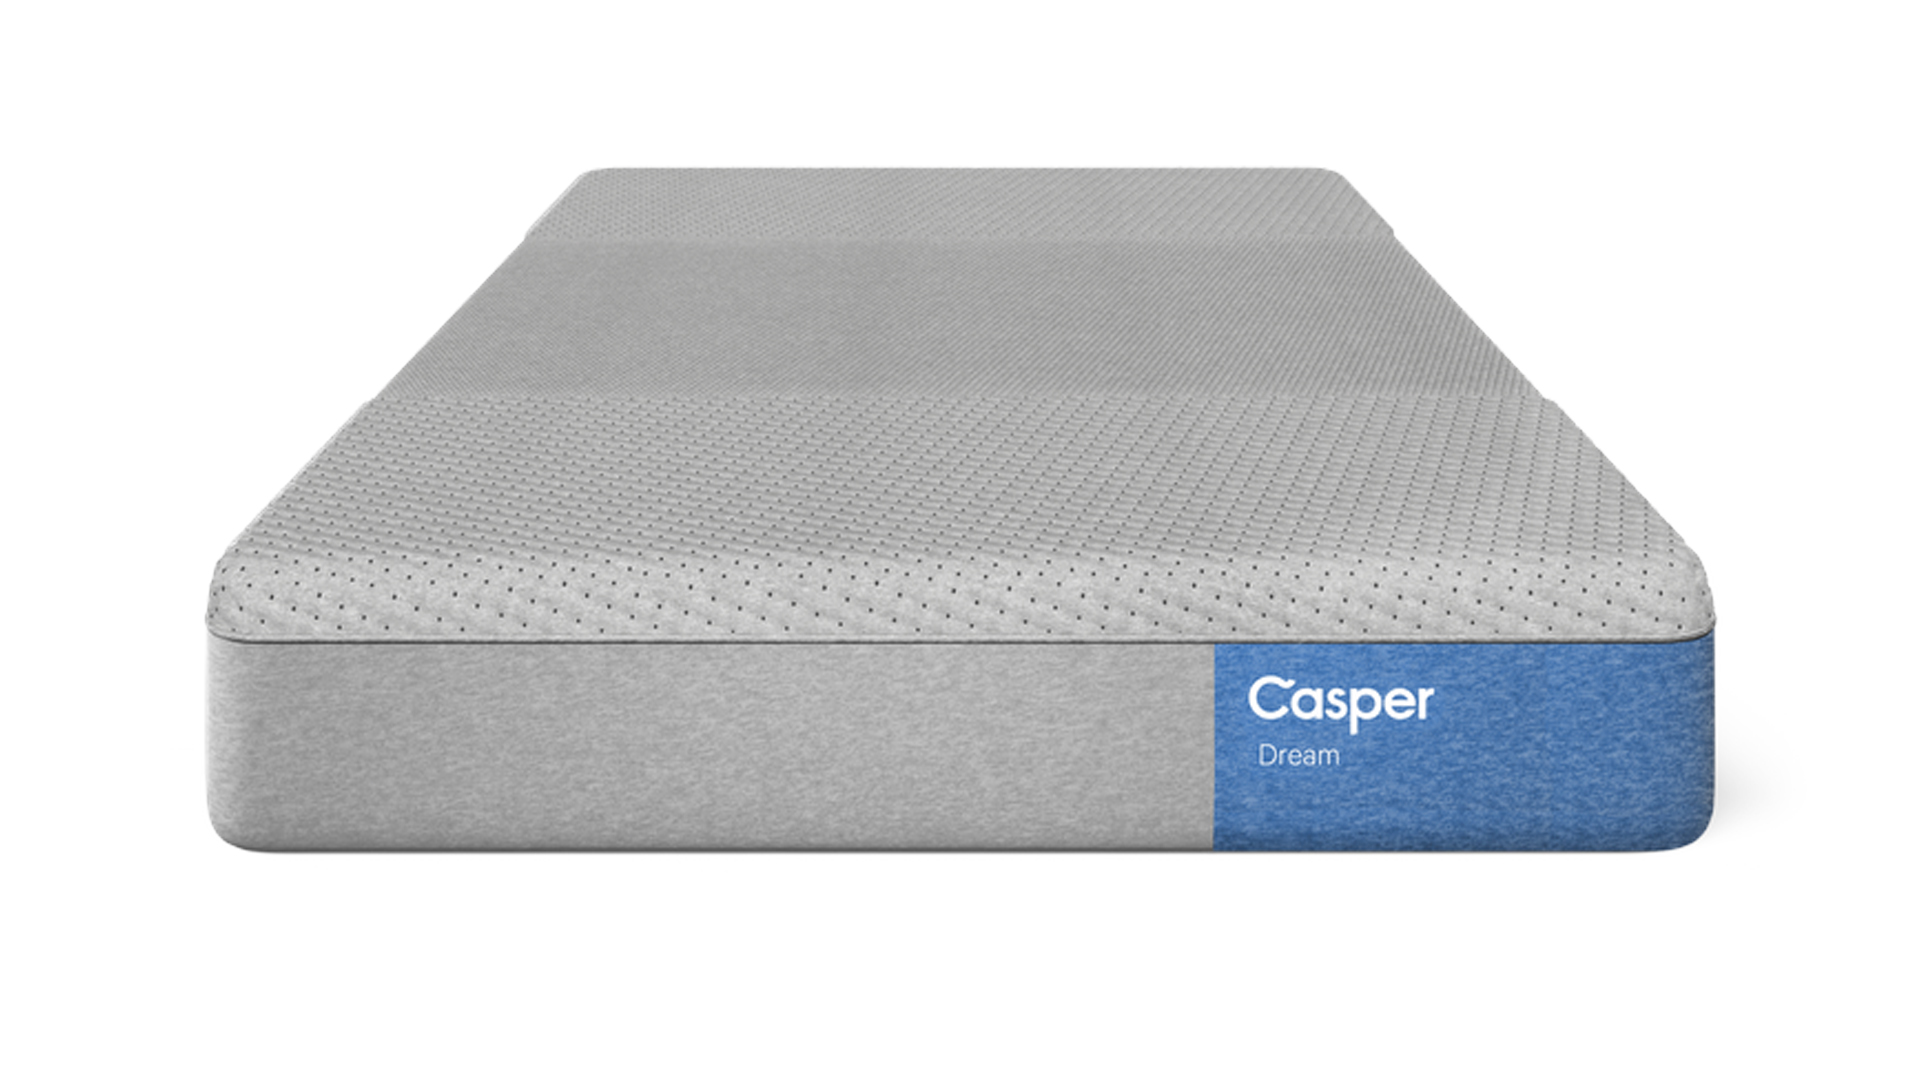 Casper Dream mattresss against a white background